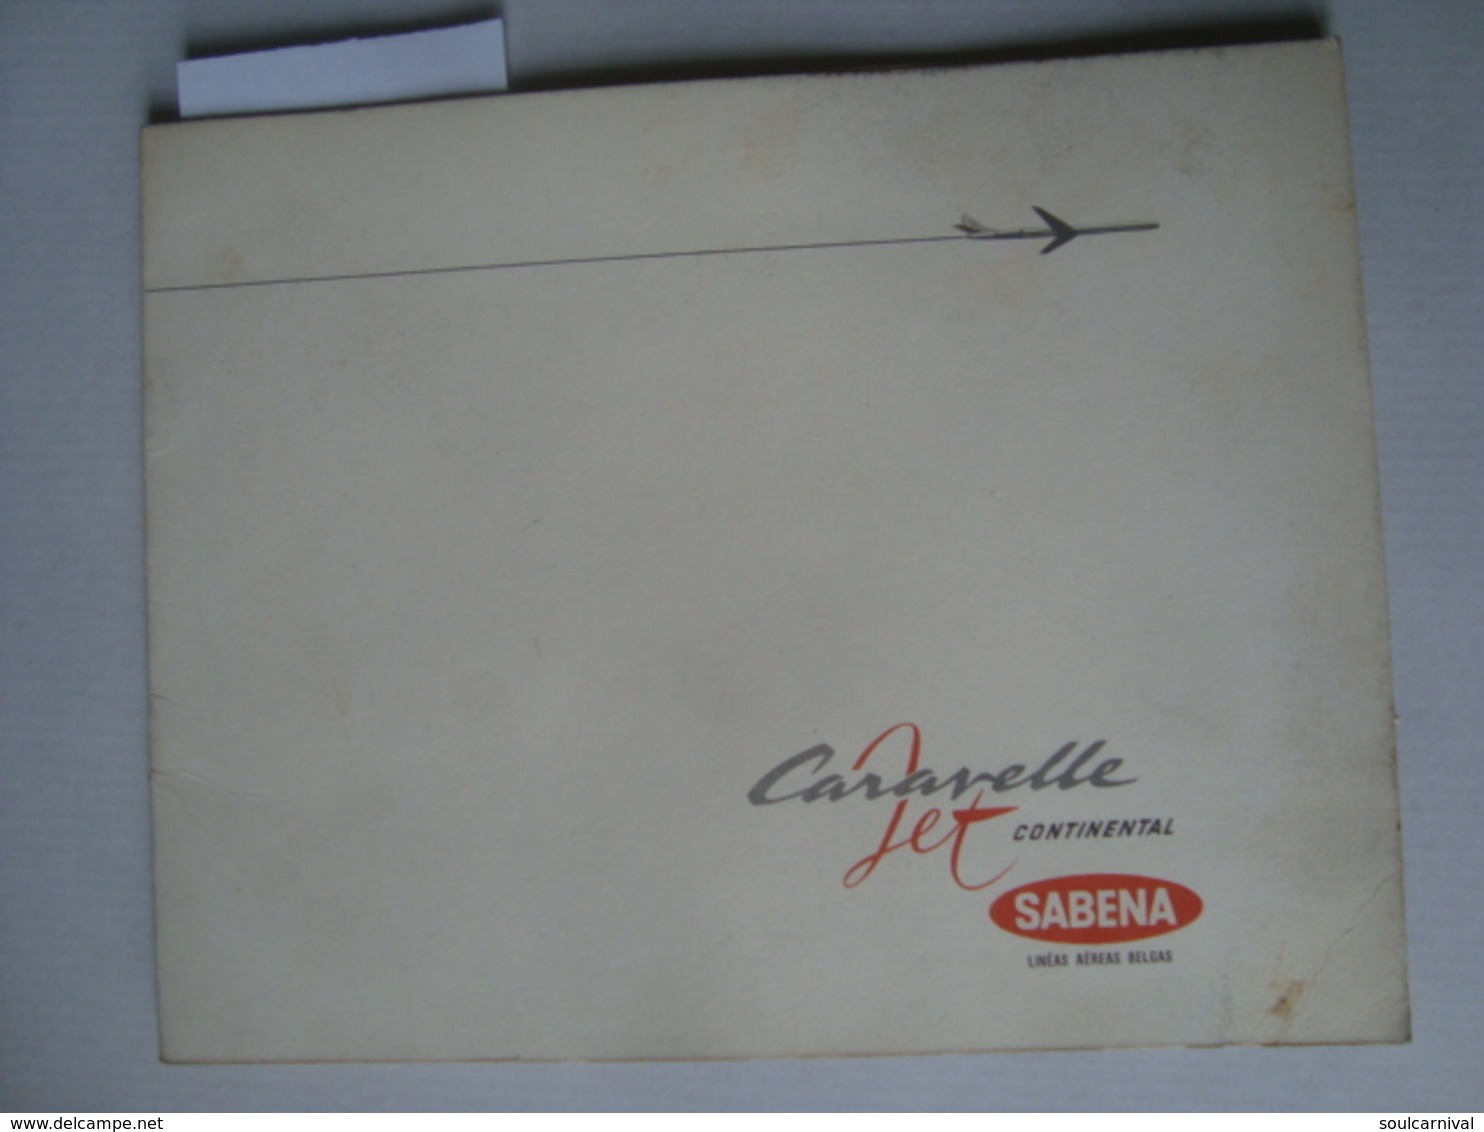 CARAVELLE JET CONTINENTAL. SABENA LÍNEAS AÉREAS BELGAS. CARAVELLE VI - BELGIUM, 1960. - Advertisements